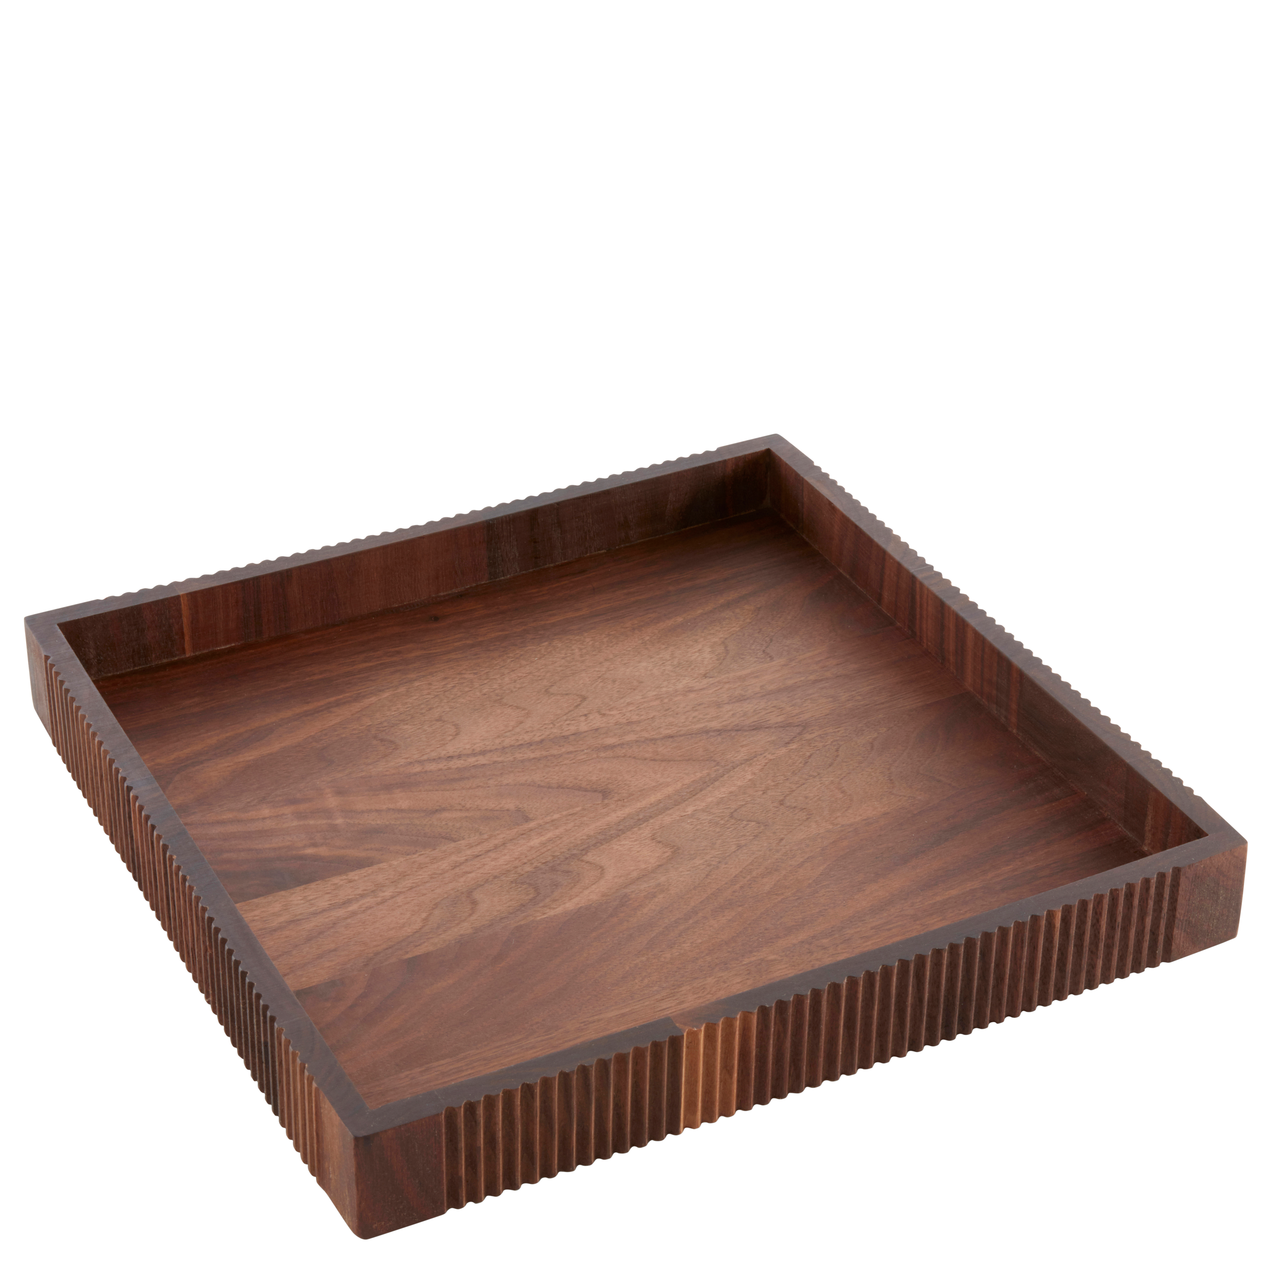 Tray wood (walnut) rectangular 30.5x30.5